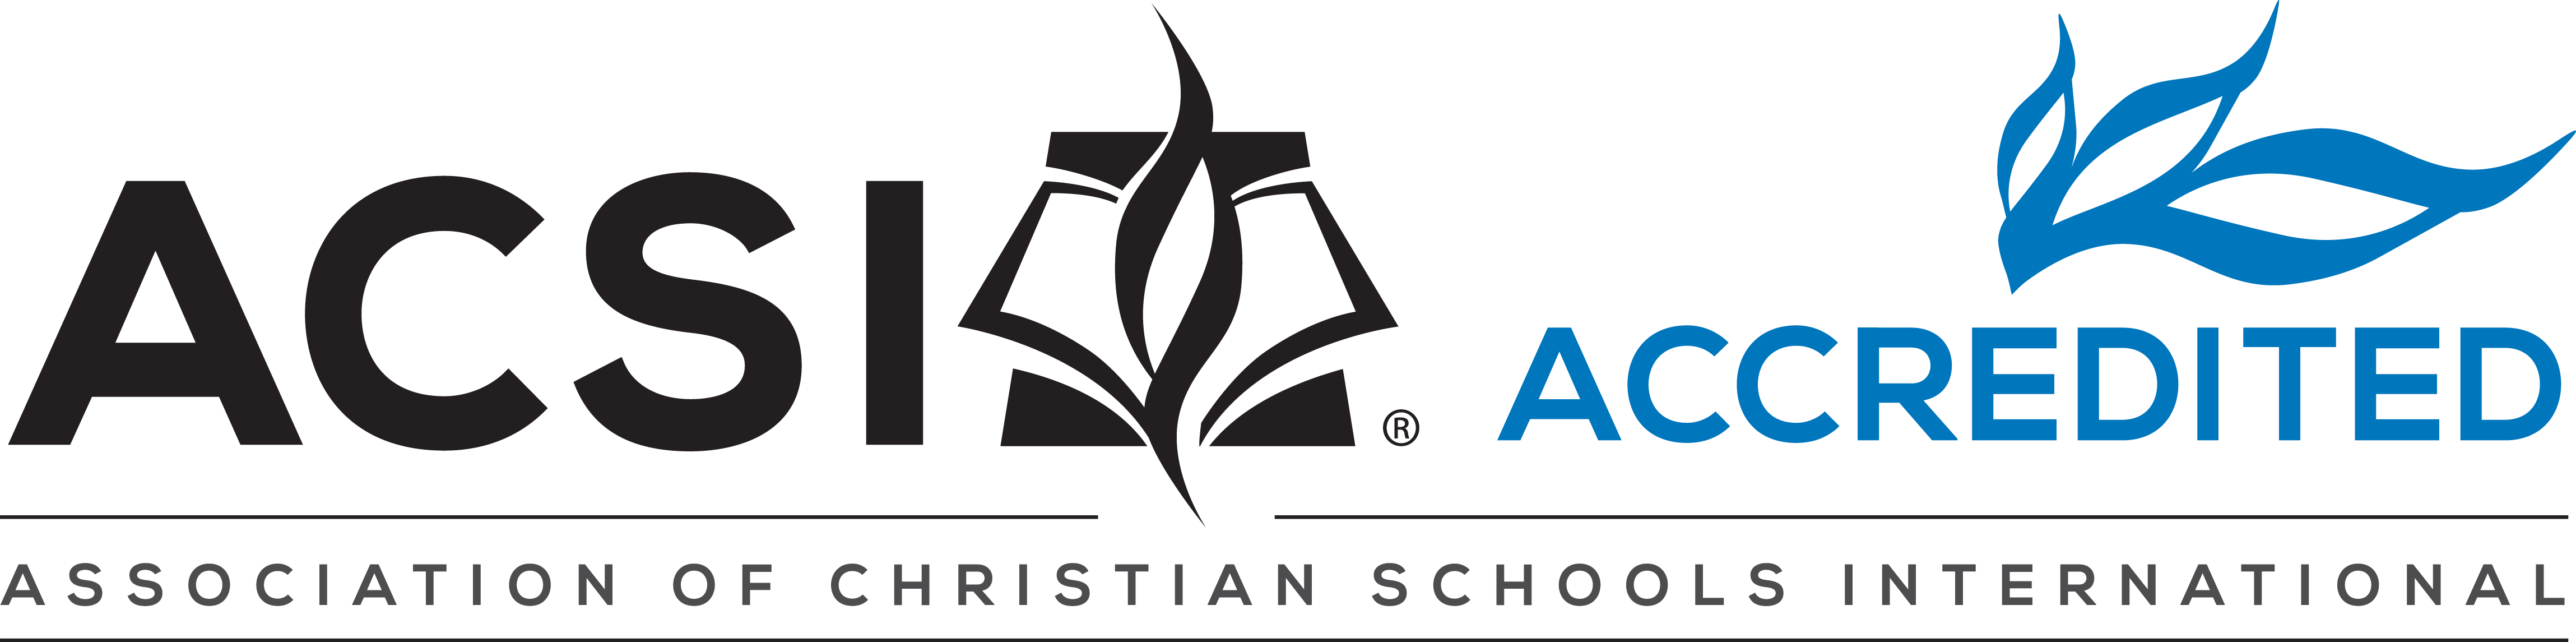 ACSI Logo for accredited schools